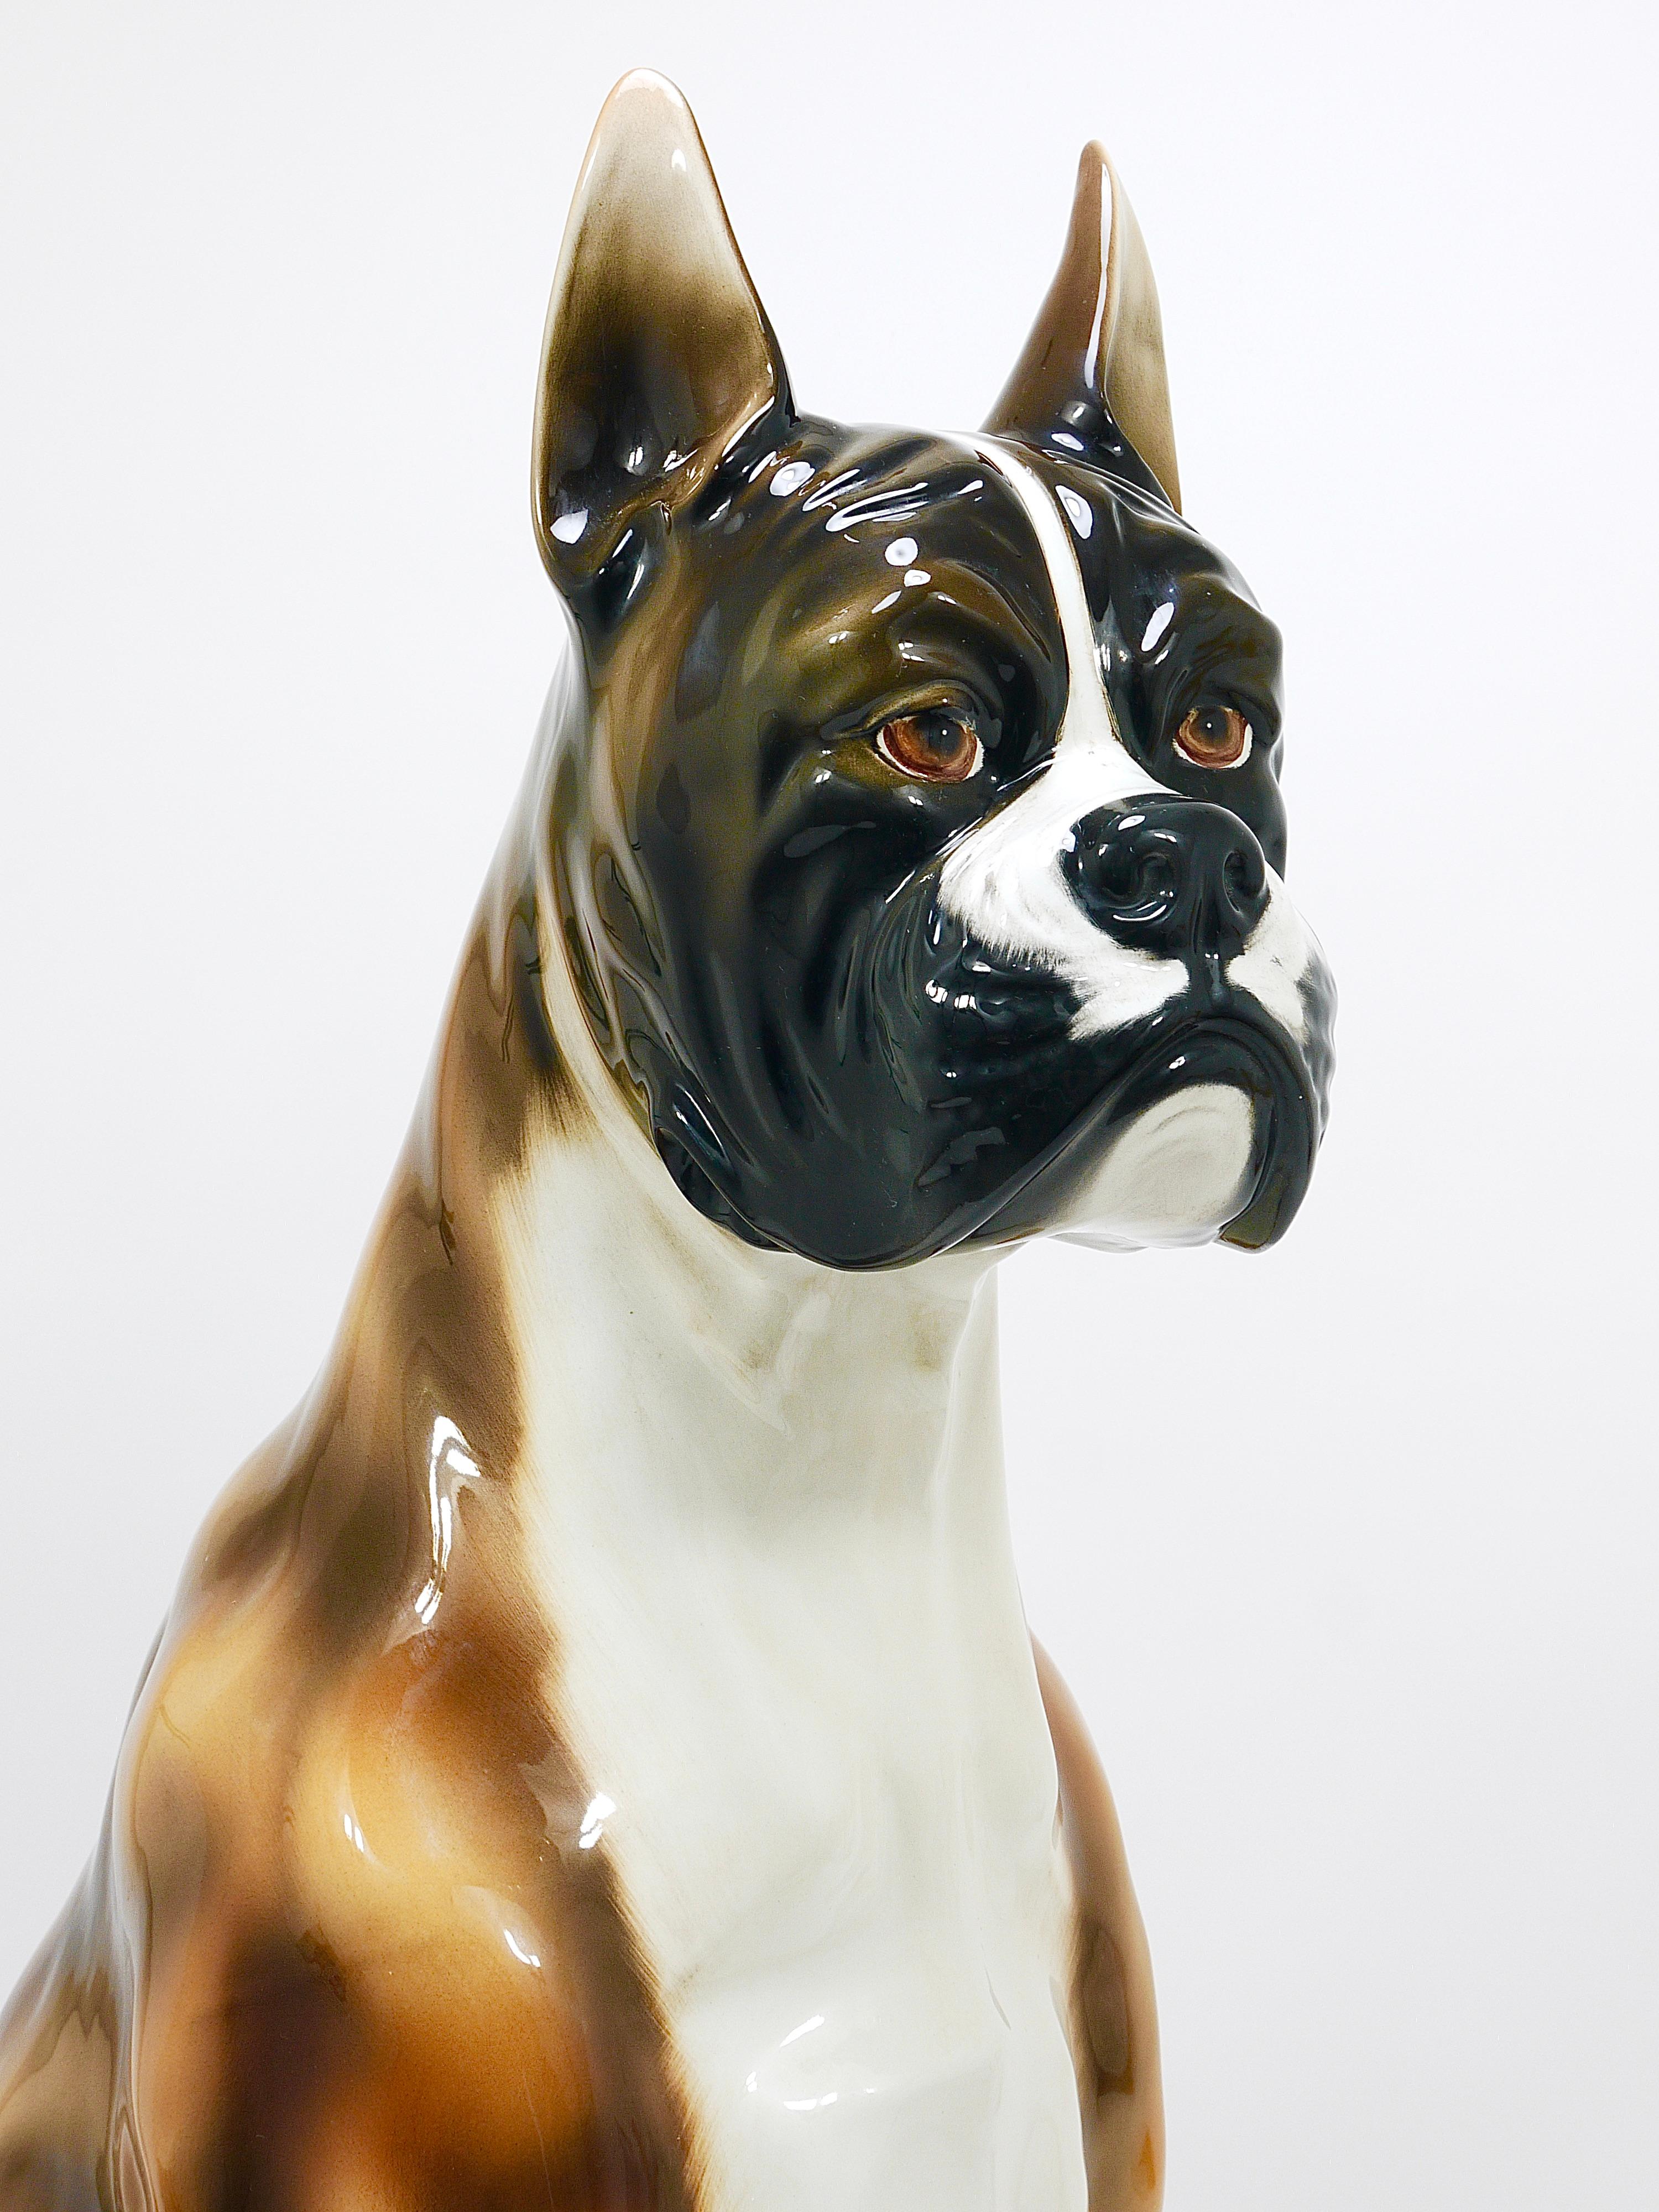 Boxer Dog Life-Size Majolica Statue Sculpture, Glazed Ceramic, Italy, 1970s For Sale 1